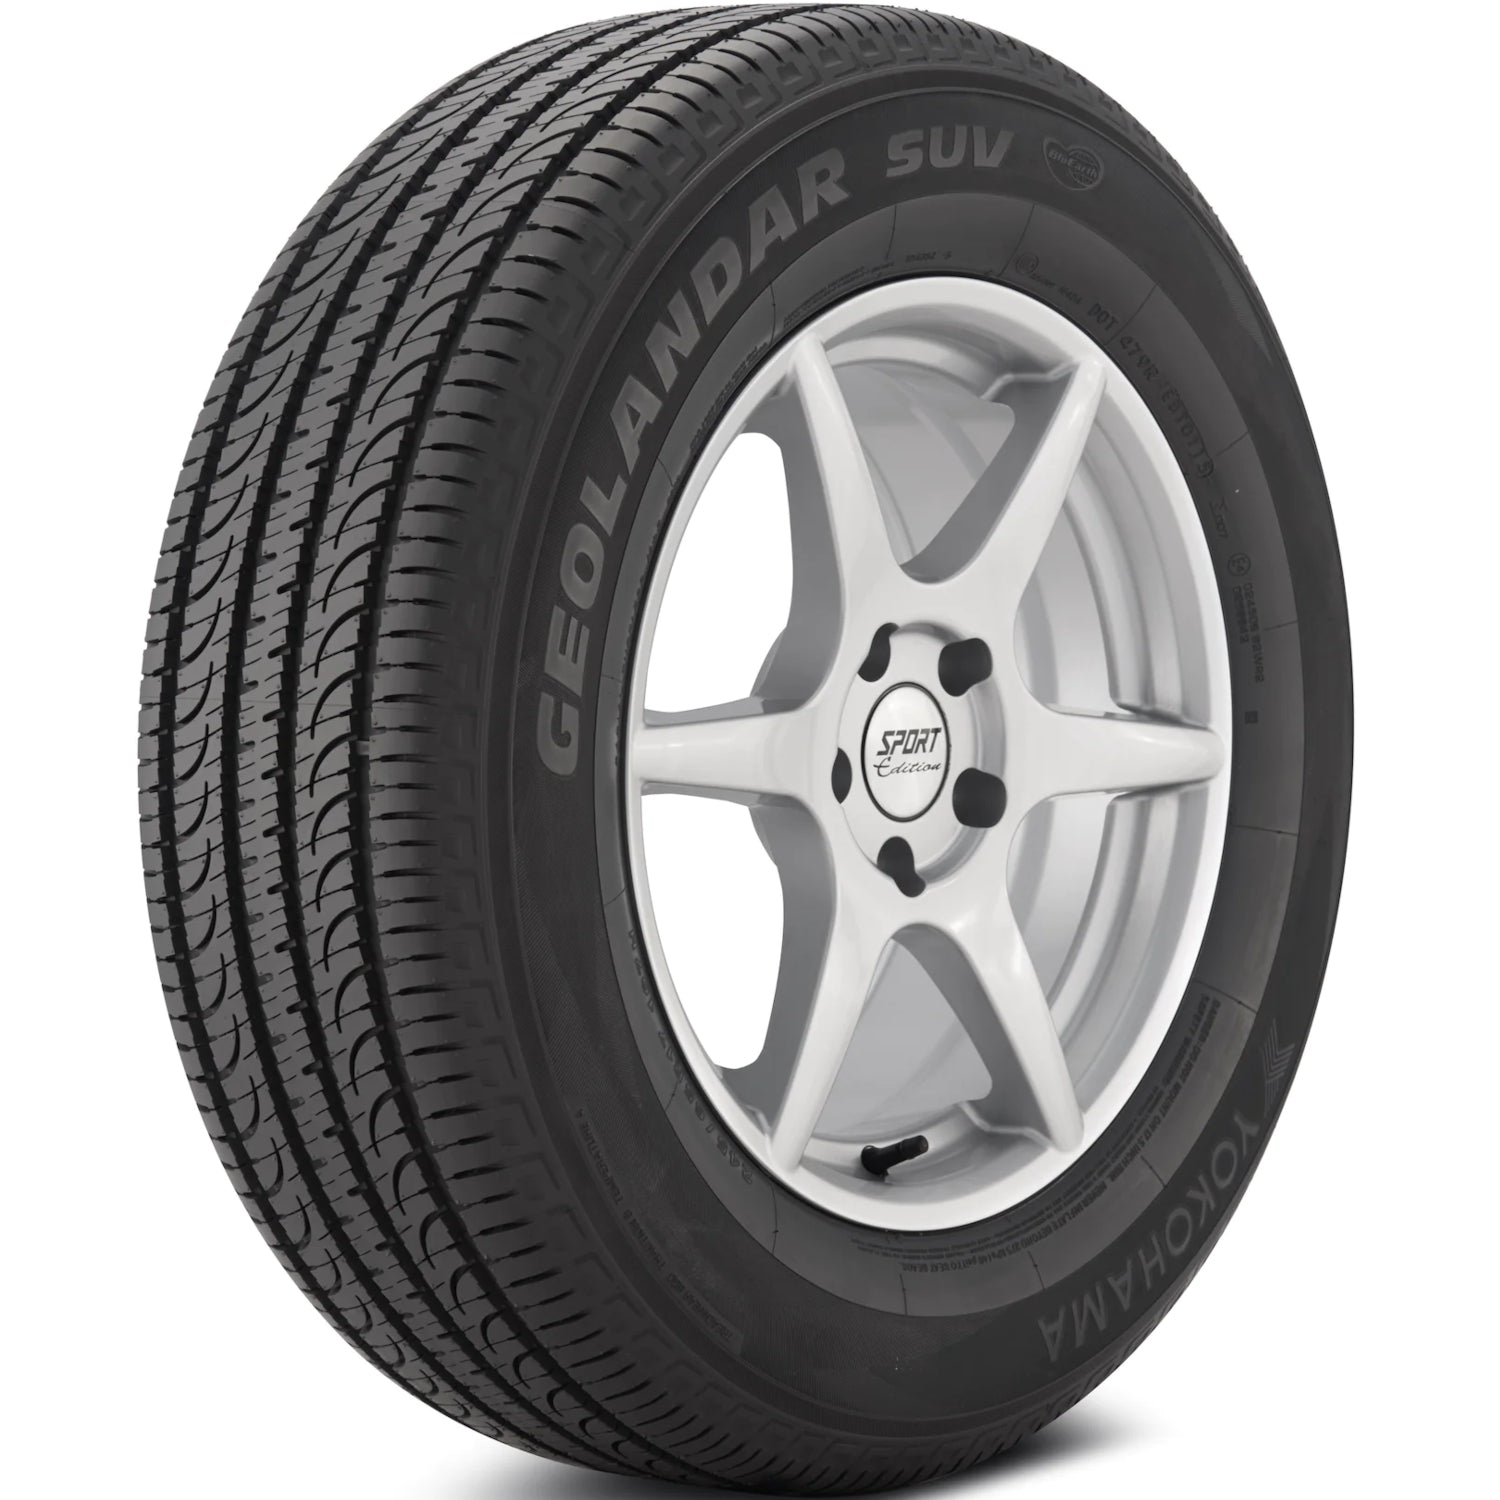 YOKOHAMA GEOLANDAR G055 245/60R18 (29.5X9.6R 18) Tires